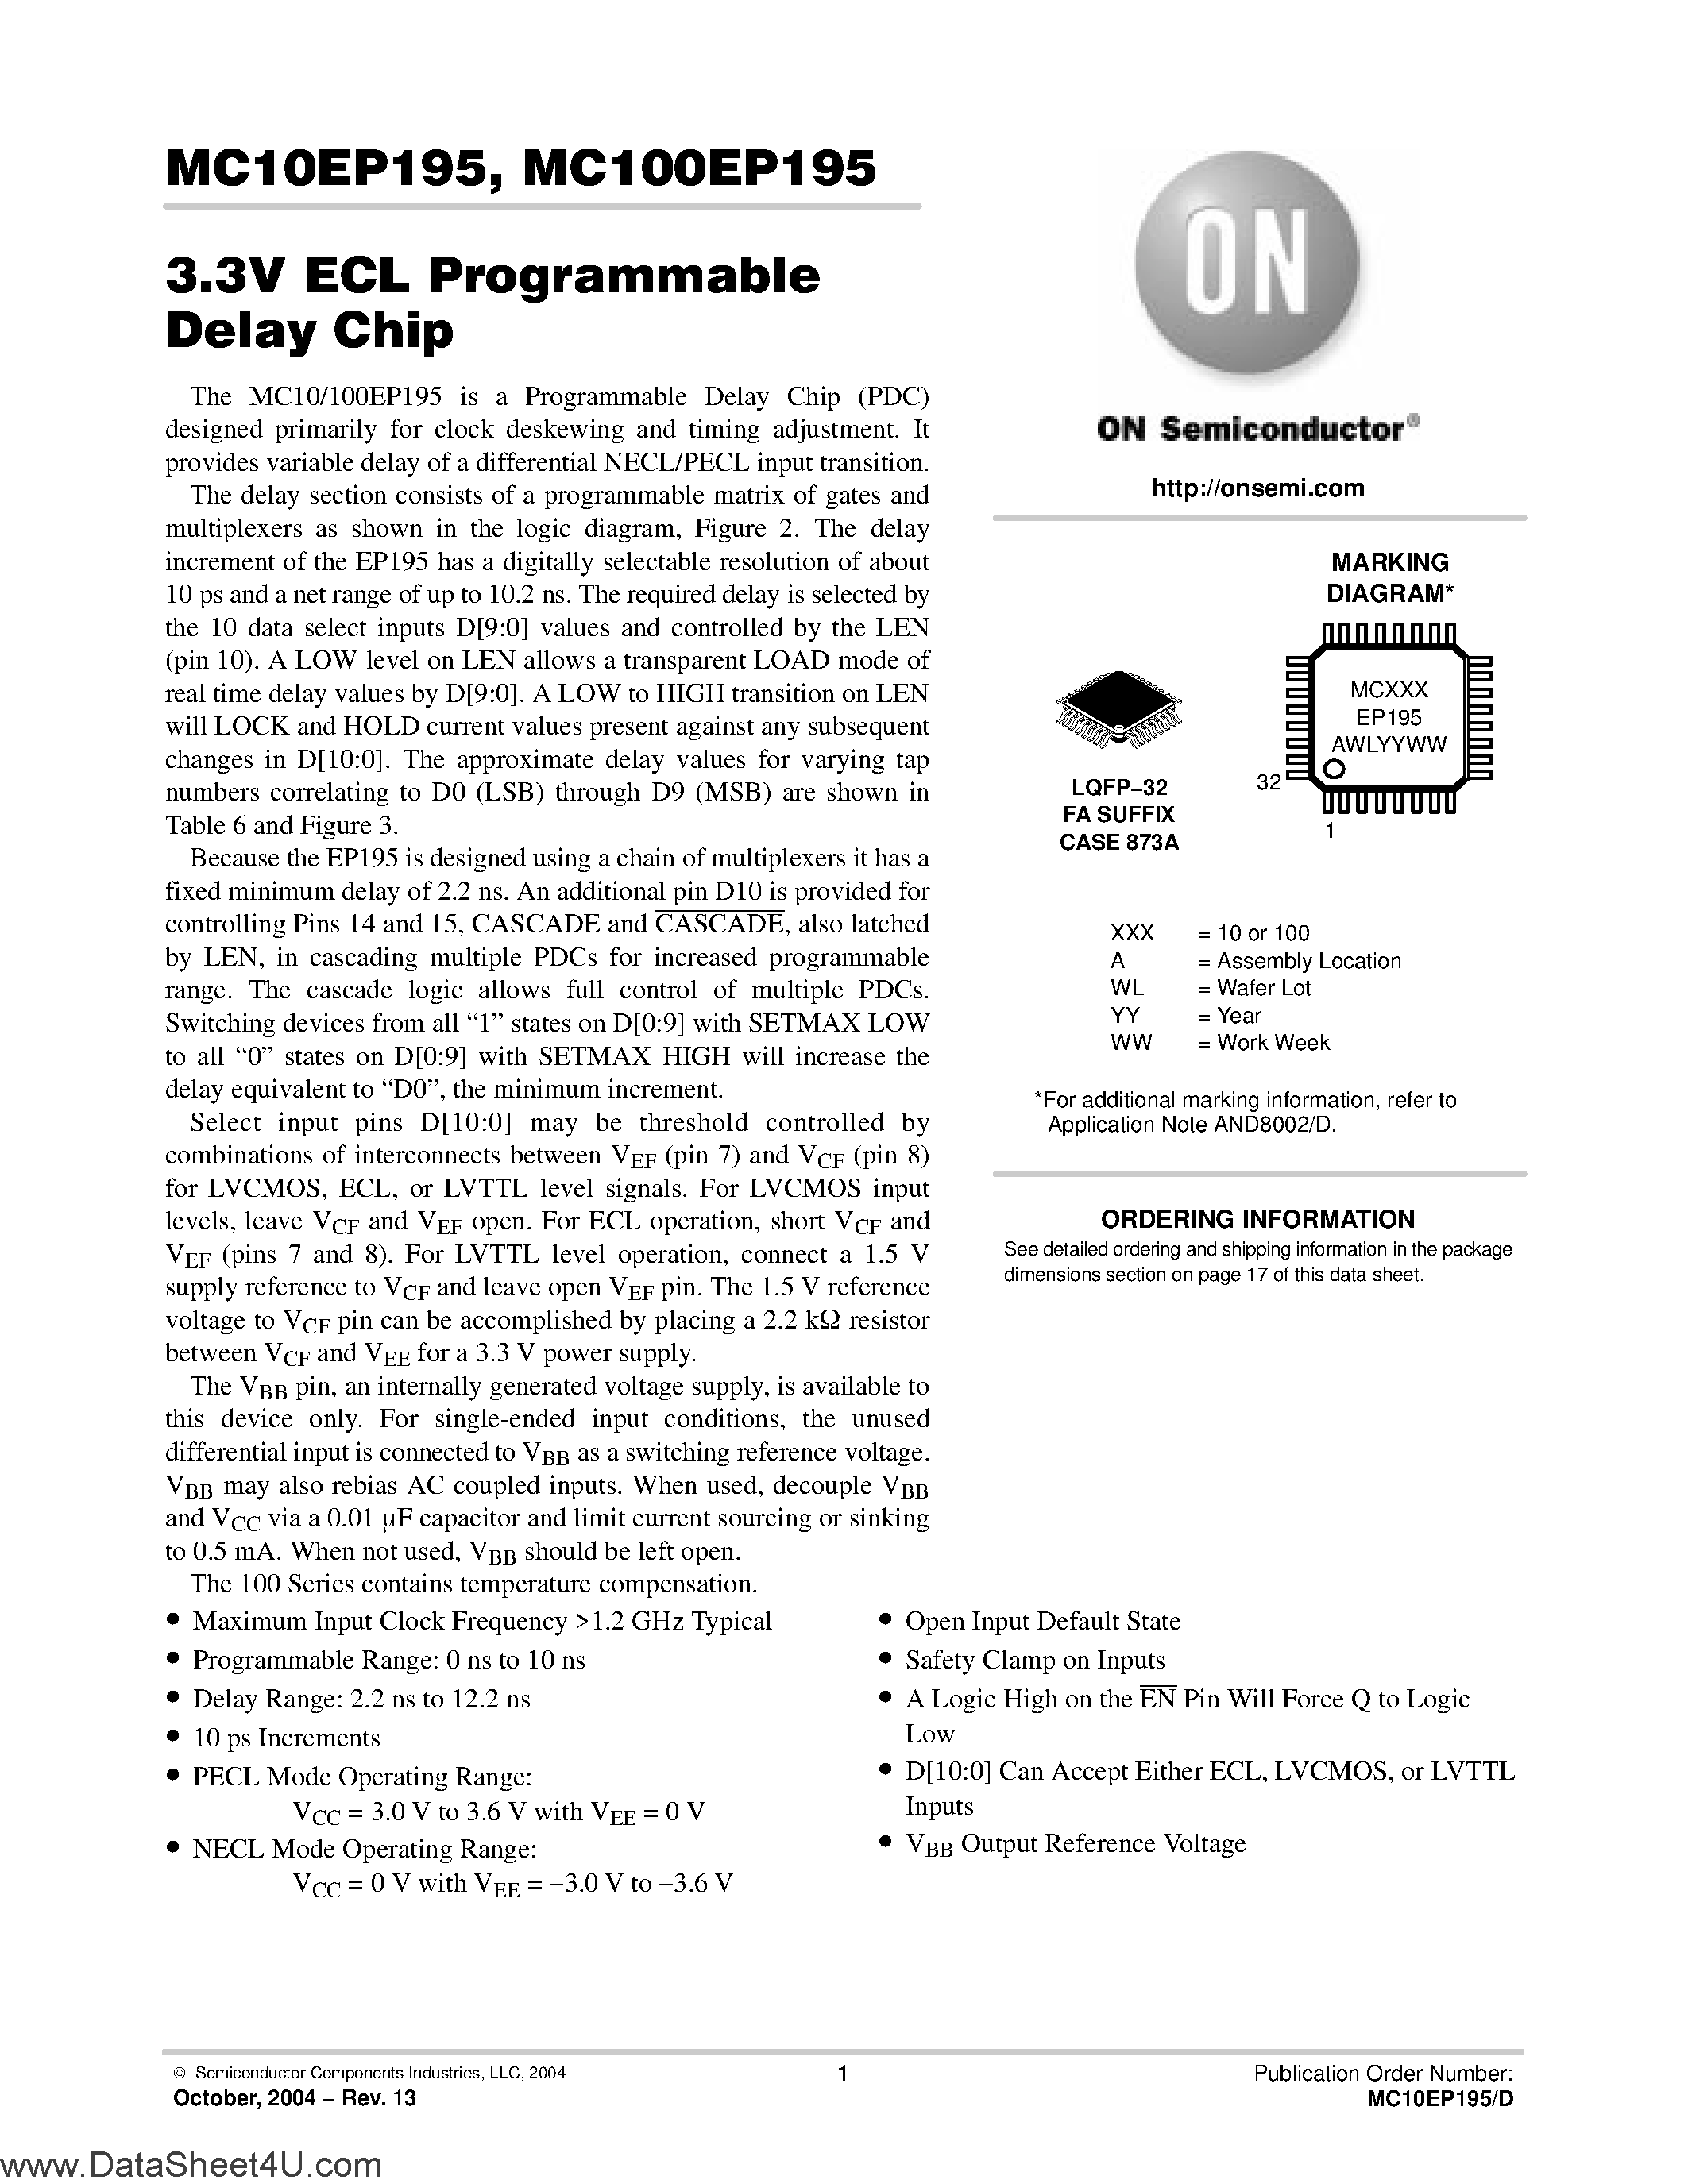 Datasheet MC100EP195 - (MC100EP195 / MC10EP195) 3.3V ECL Programmable Delay Chip page 1